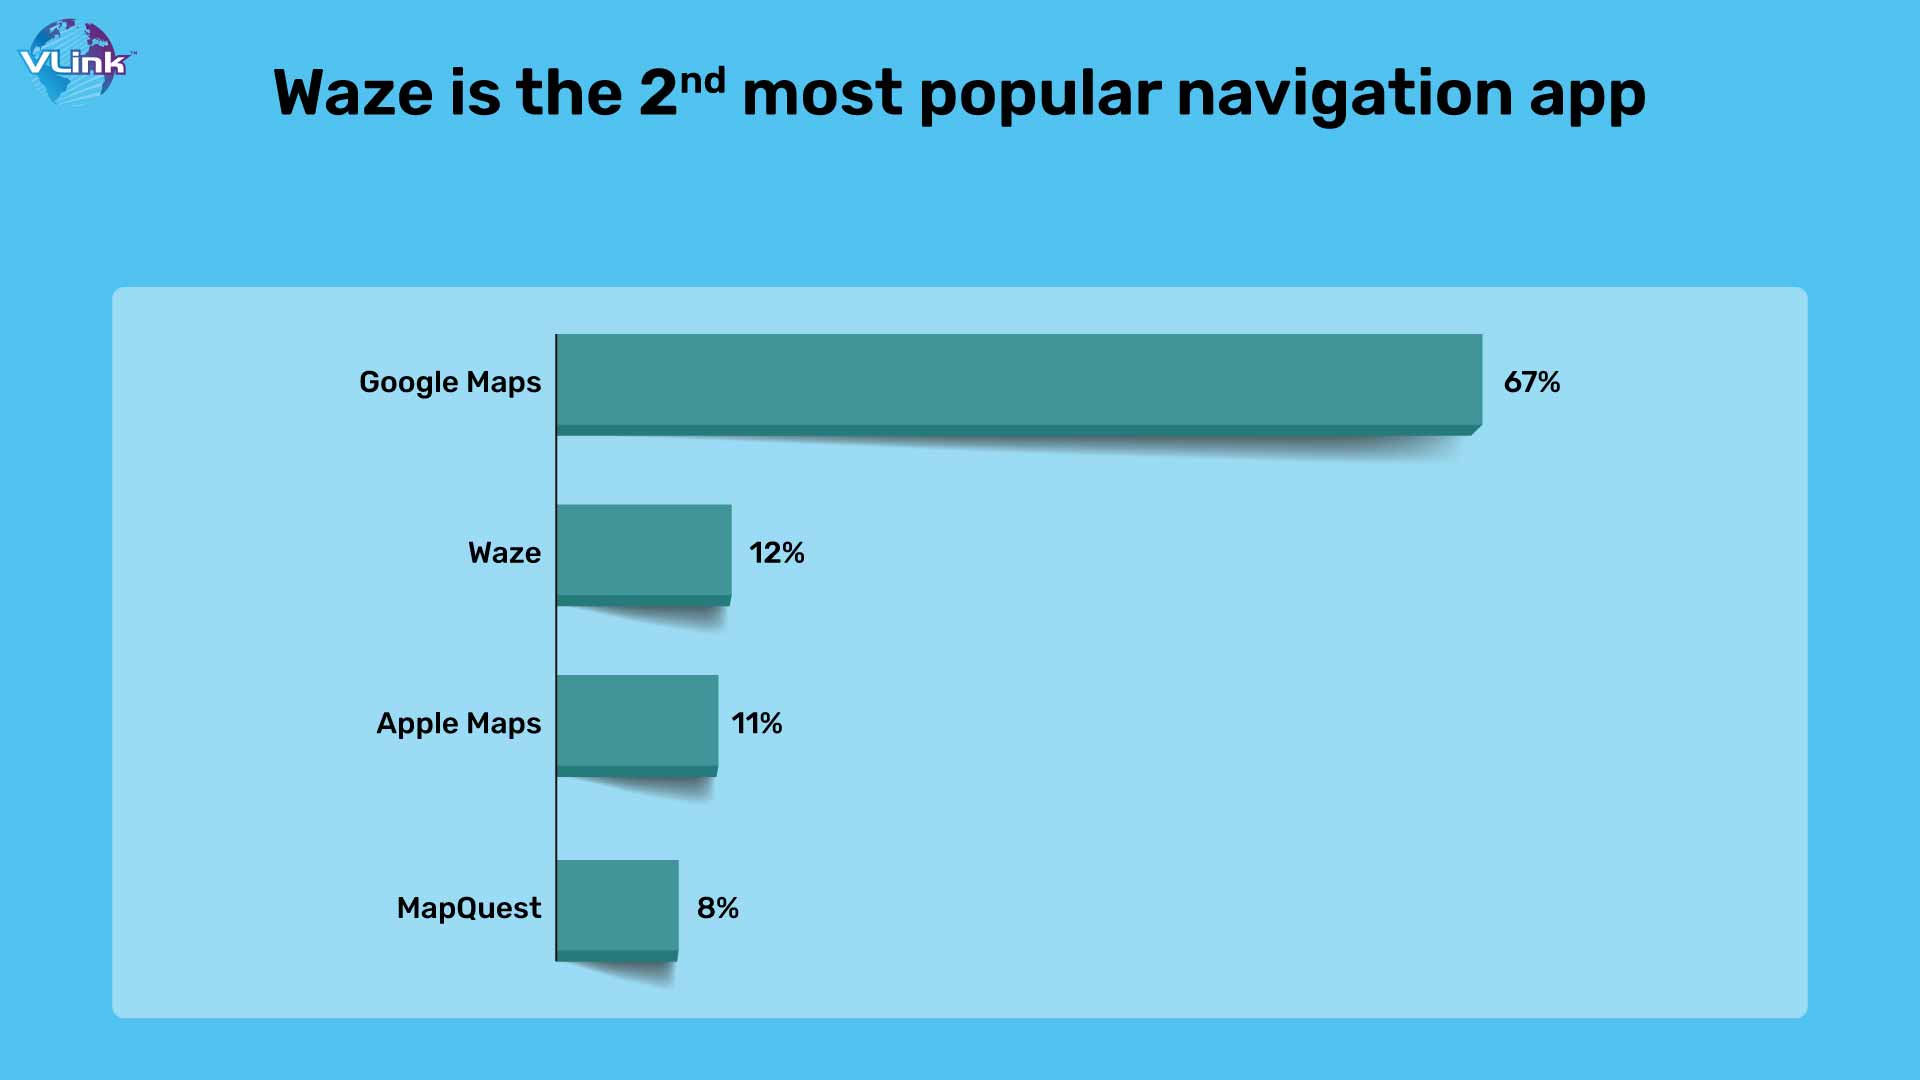 Waze is the 2nd most popular navigation app